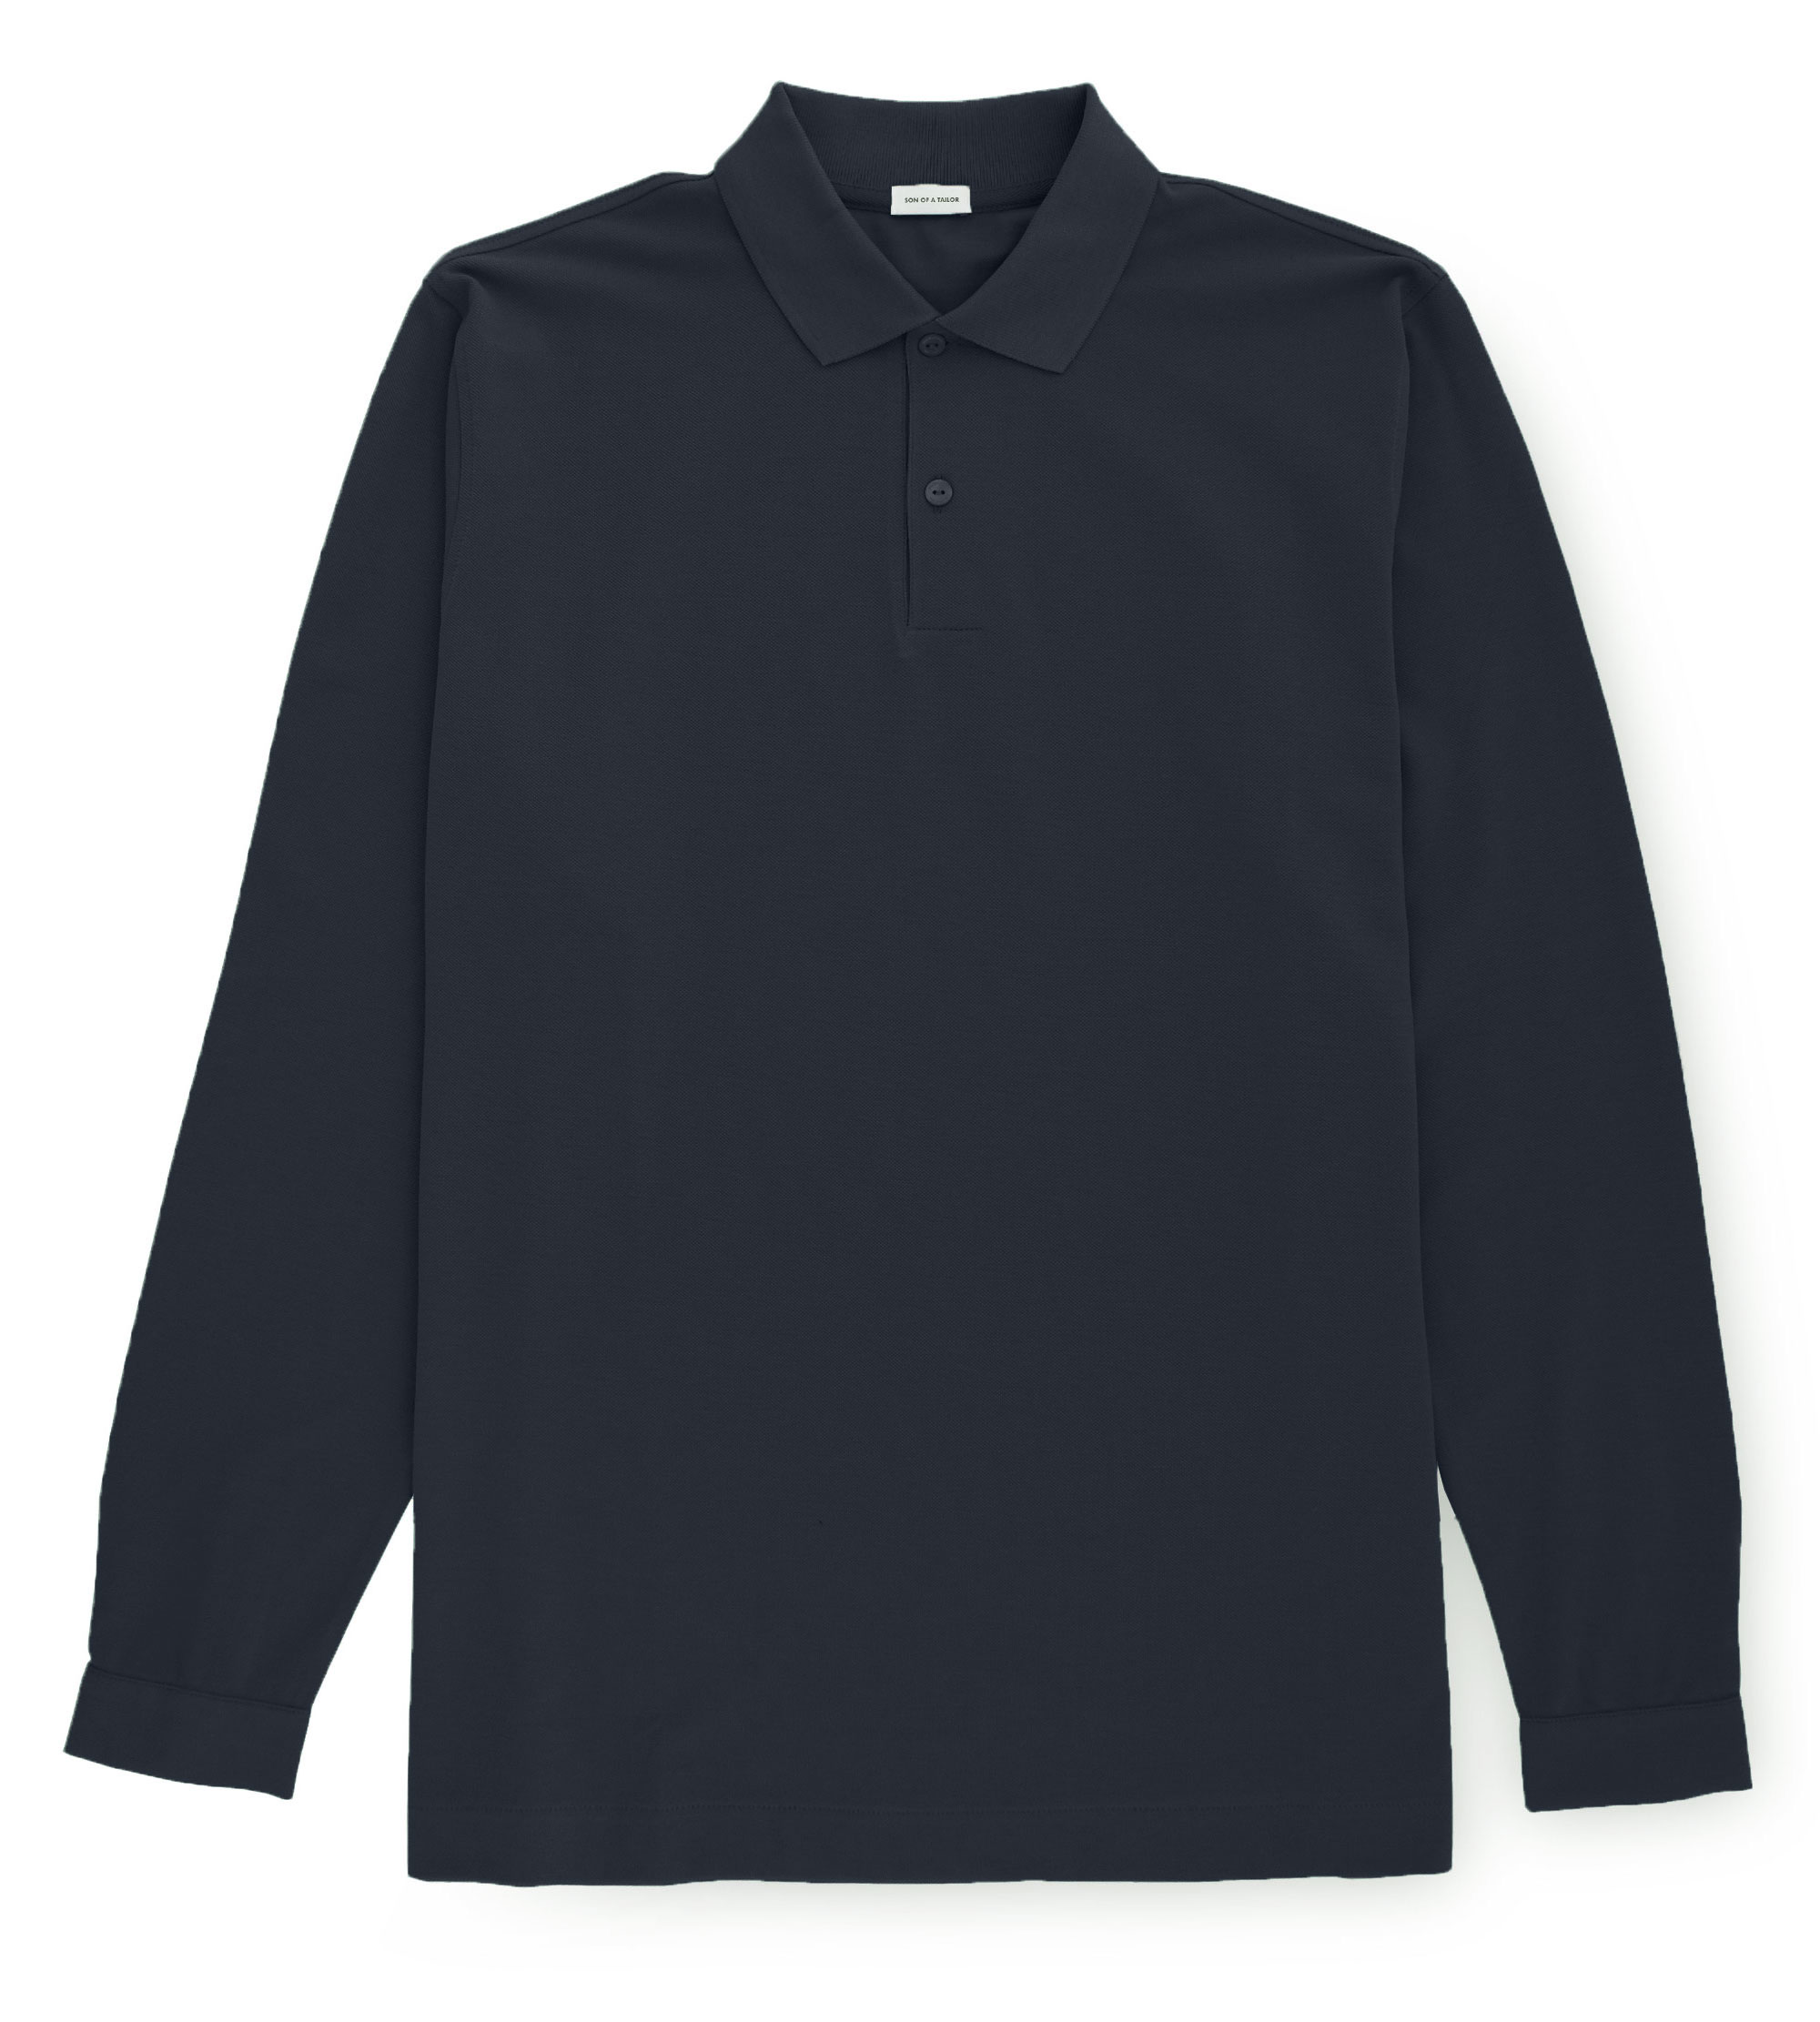 DOBYYUNZHEN Men's Personalized Long Sleev Polo Shirts